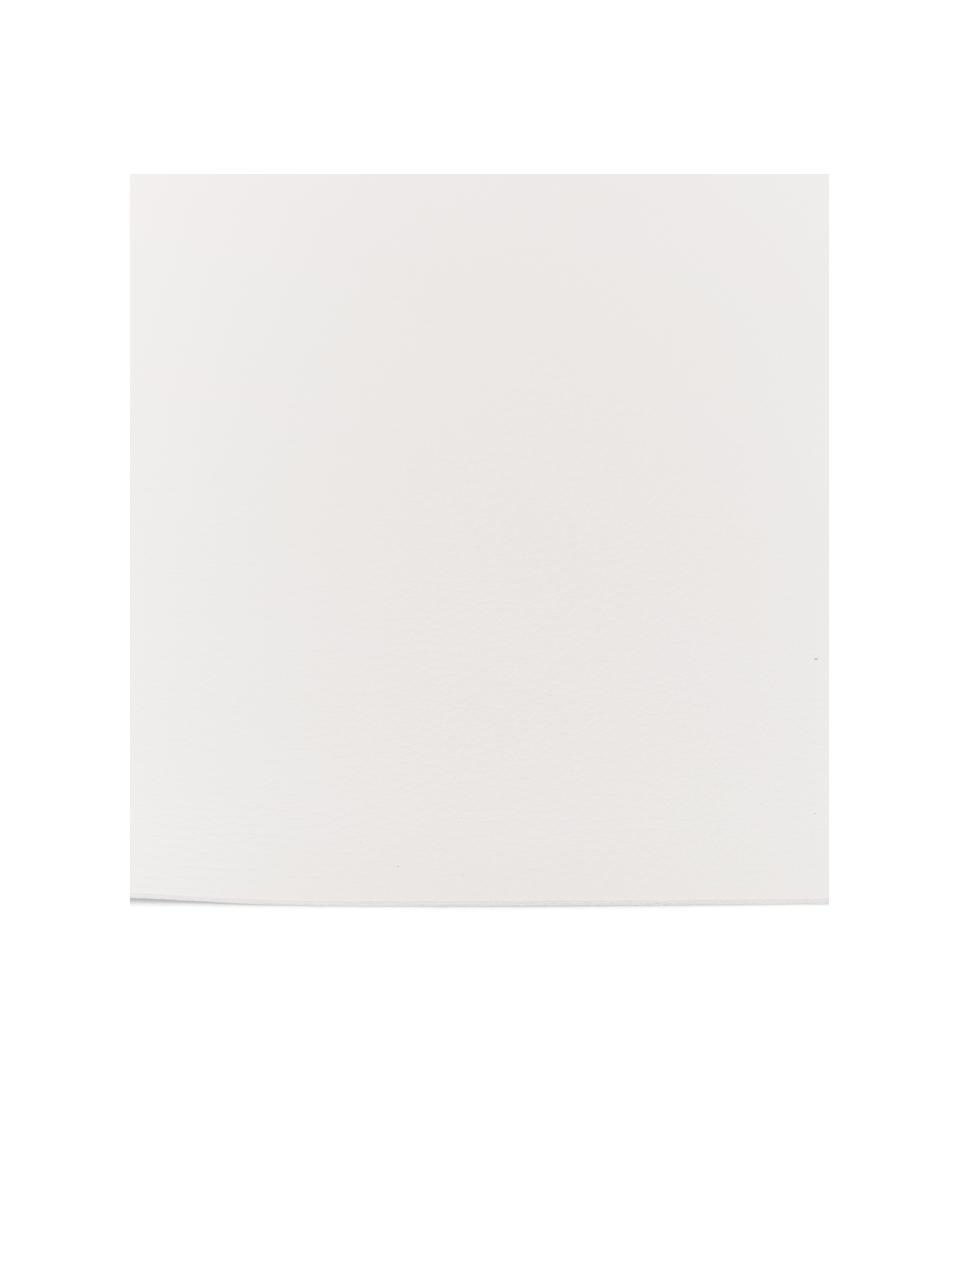 Tovaglietta americana in similpelle Pik 2 pz, Materiale sintetico (PVC), Bianco, Larg. 33 x Lung. 46 cm